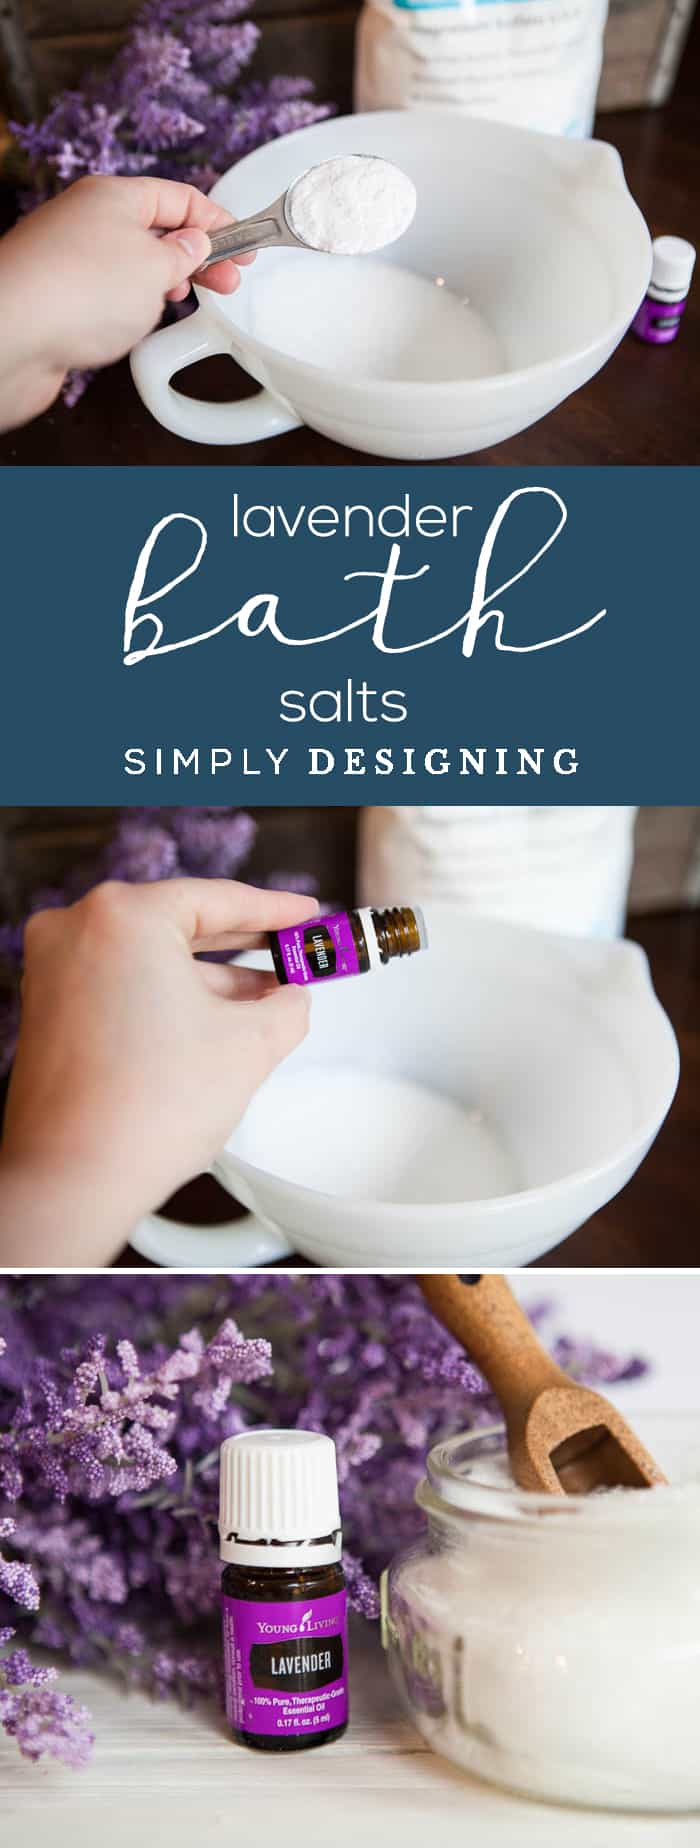 How to make bath salts - lavender bath salts - bath salt recipe